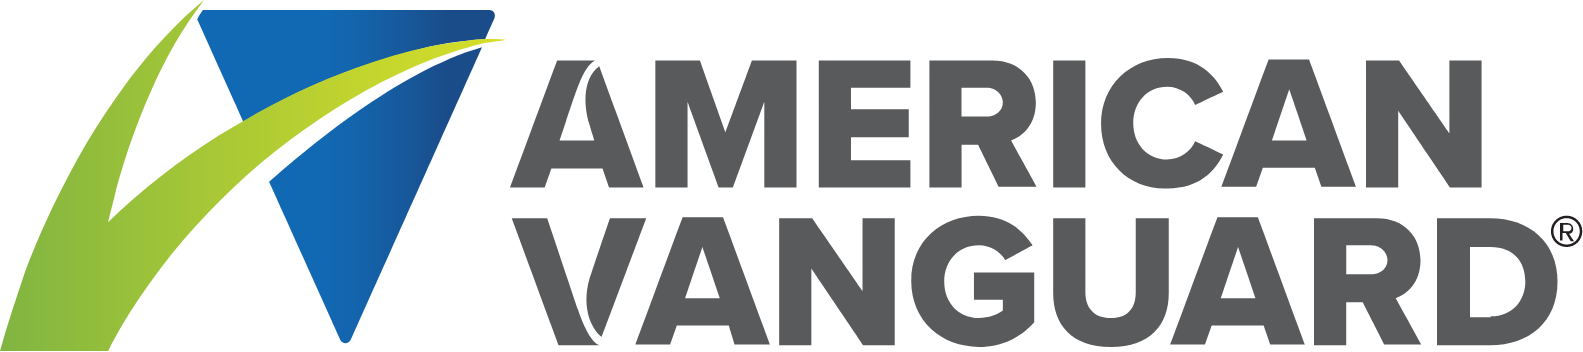 American Vanguard logo large (transparent PNG)